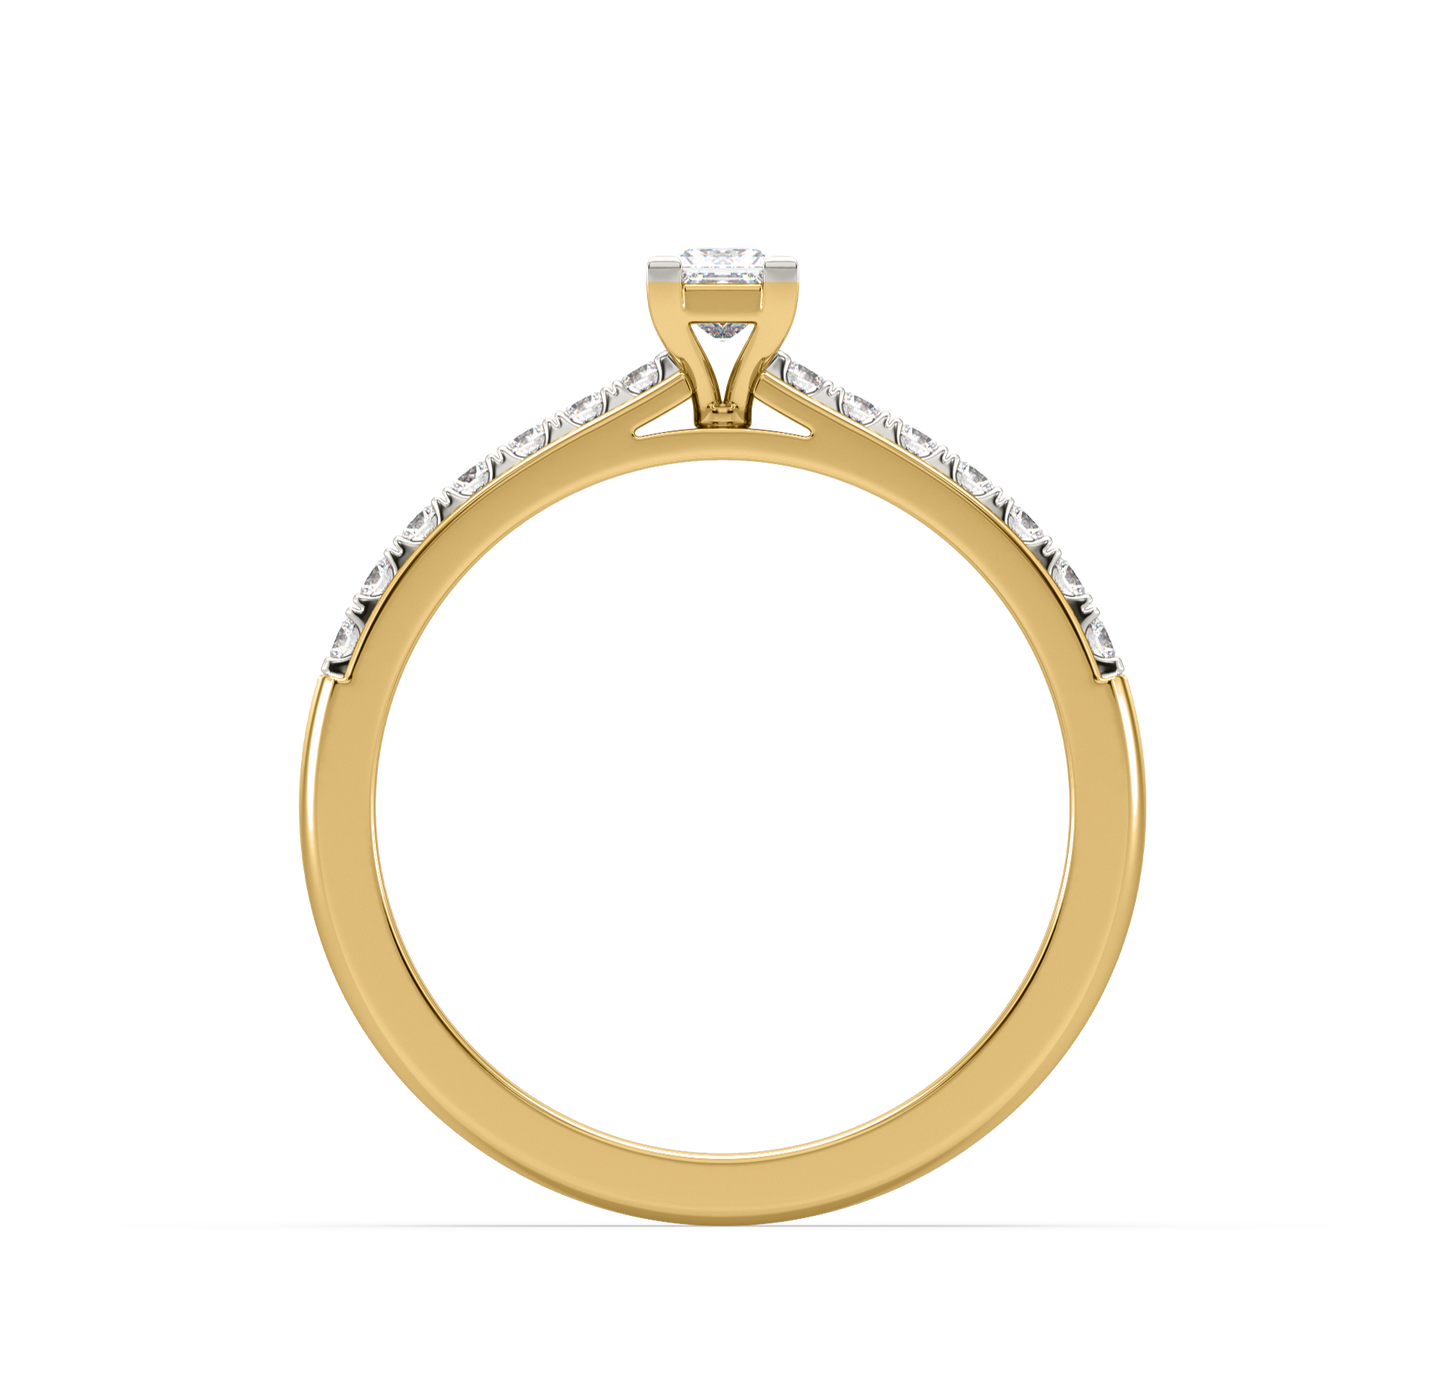 Customised ring RG21007-PH21001